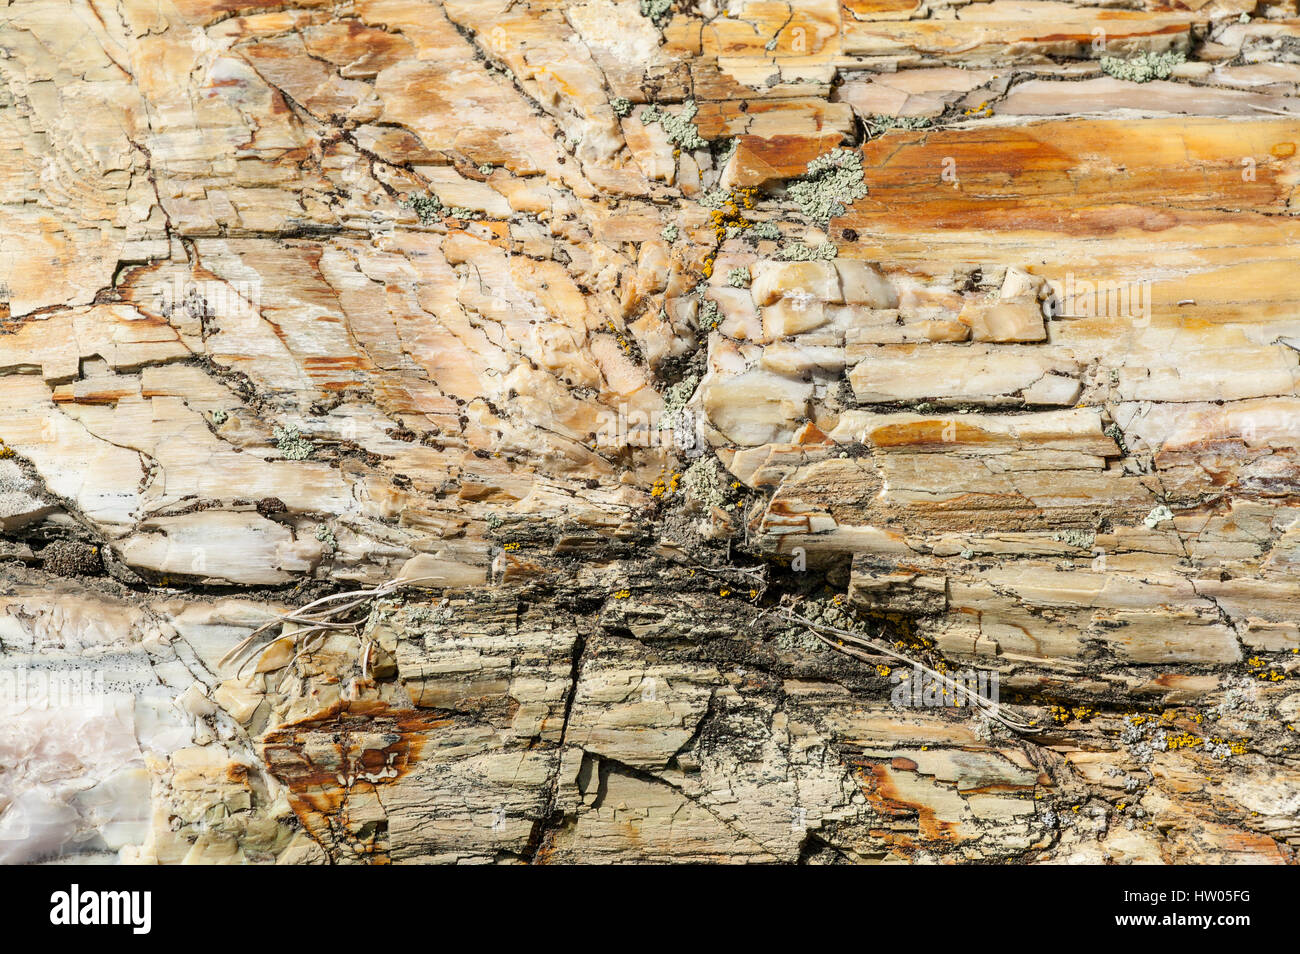 Petrified Wood of logs turned to stone in Ginkgo Petrified Forest State Park near Vantage, Washington, USA Stock Photo